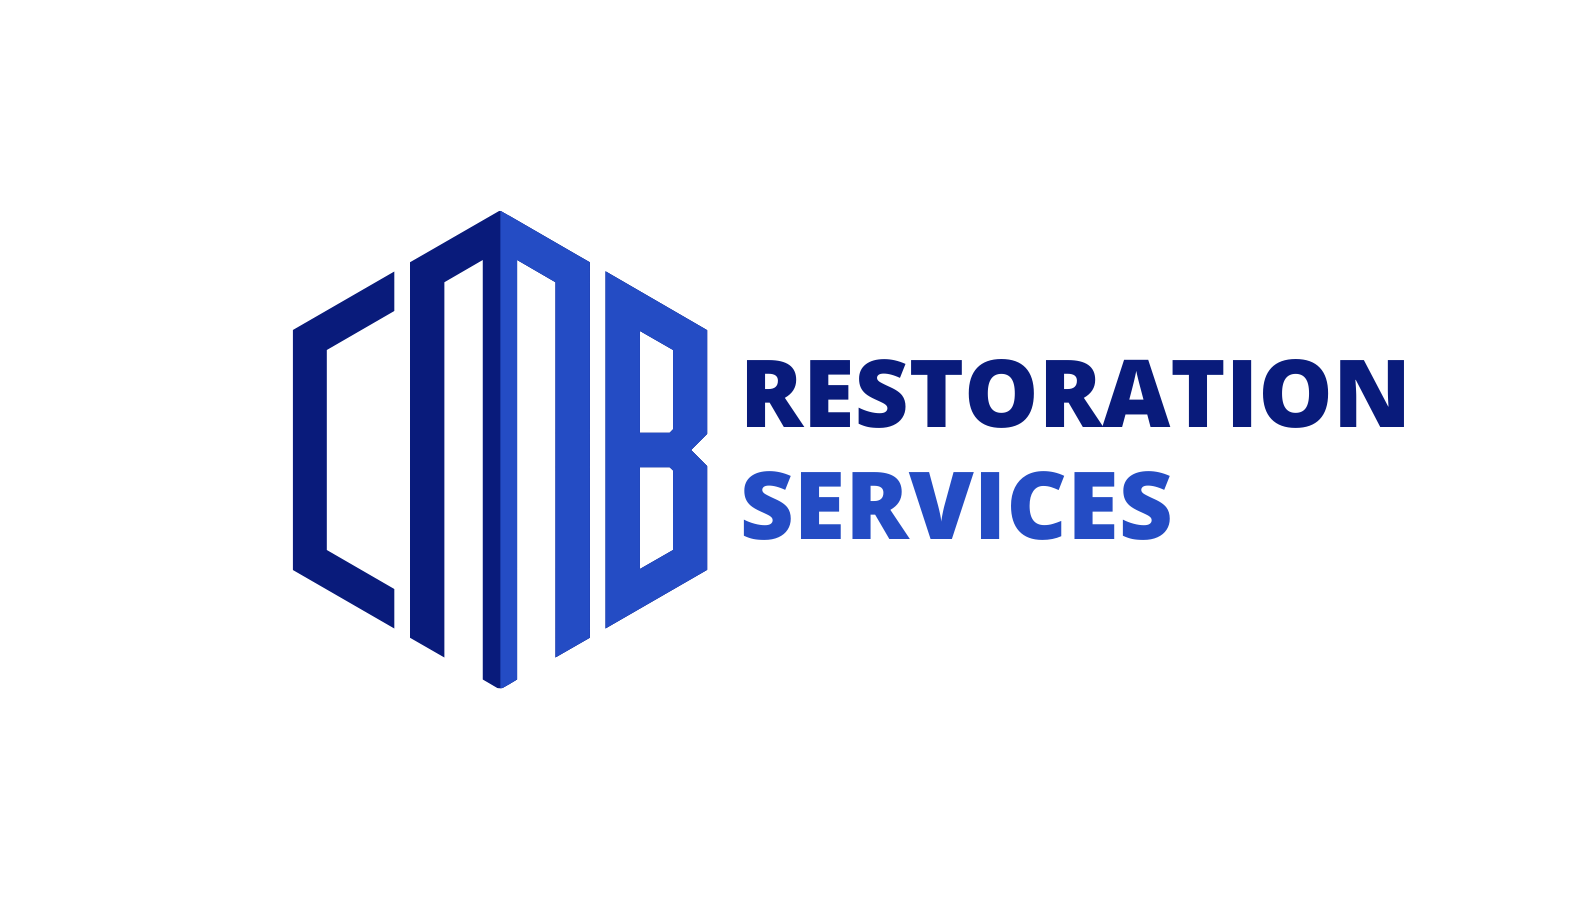 CMB Restoration Services